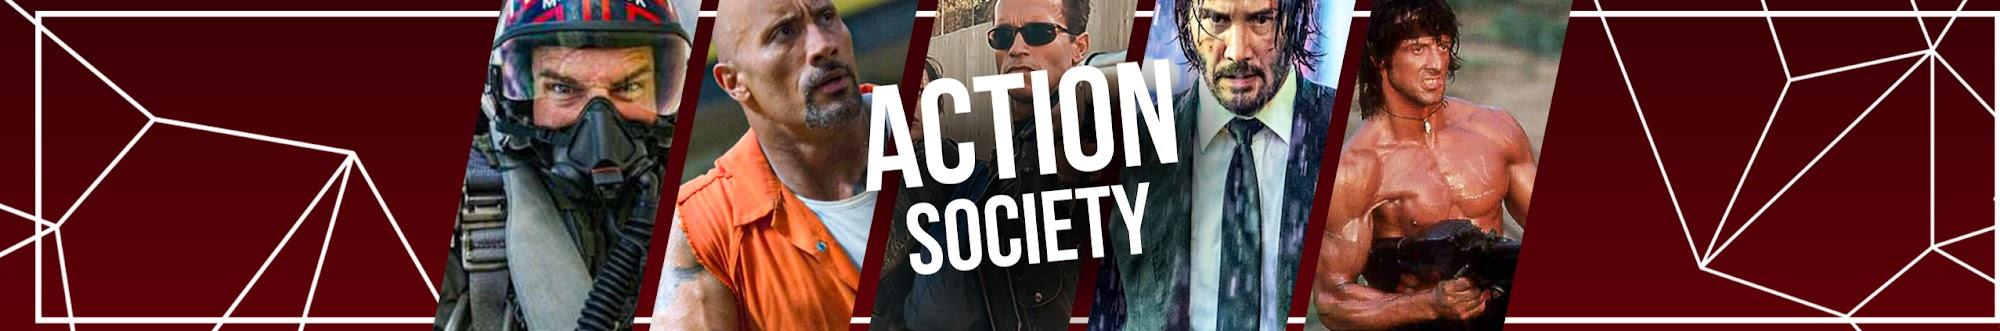 Action Society